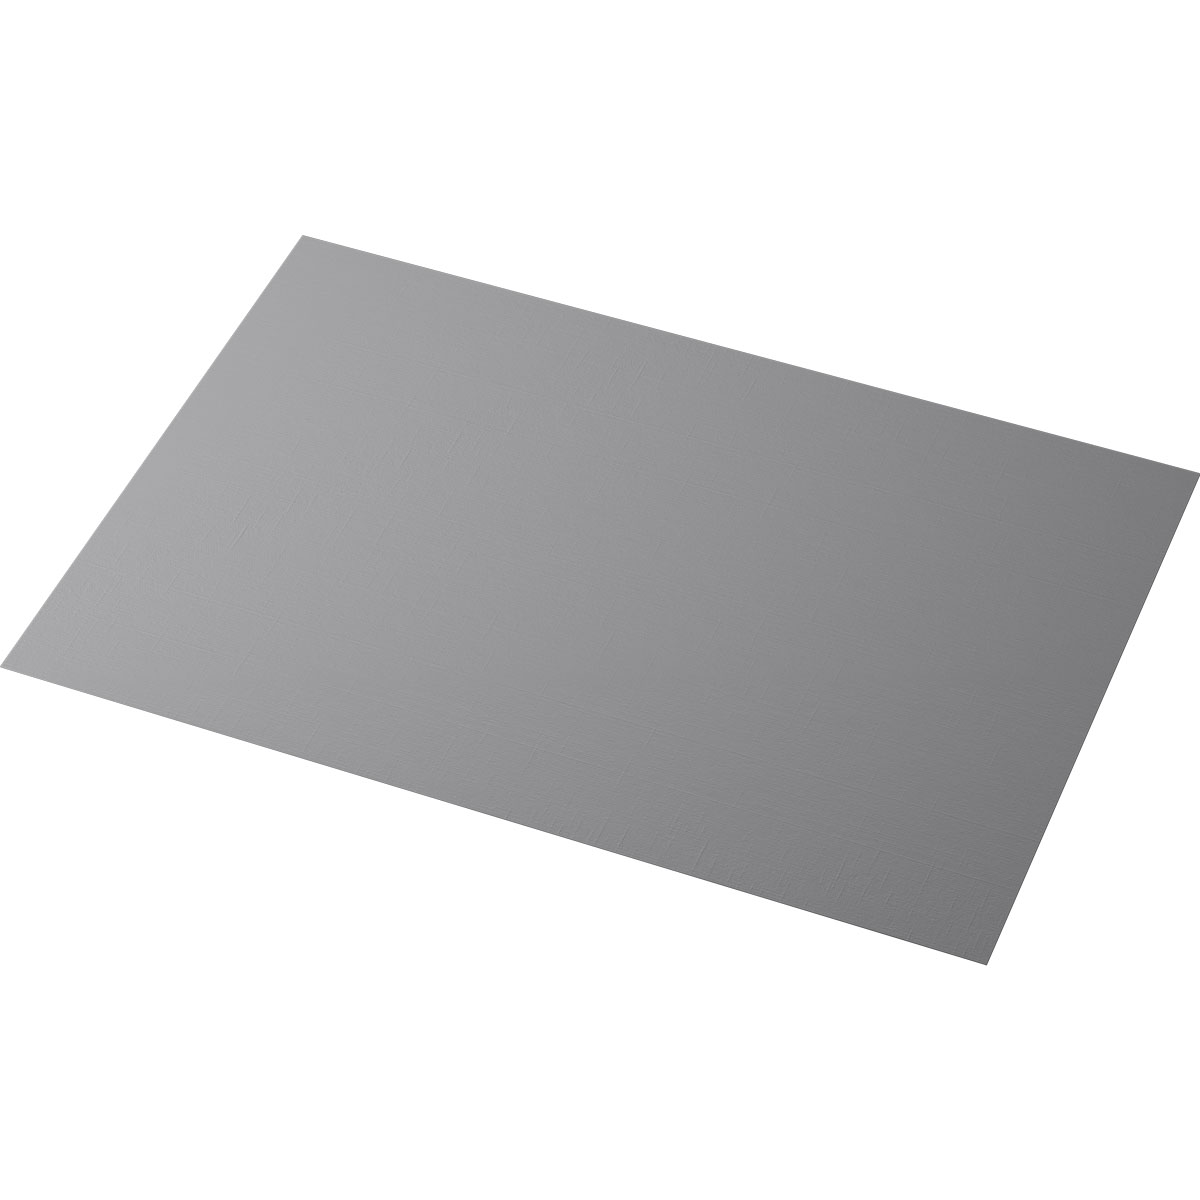 Duni Evolin-Tischsets 30 x 43,5 cm granite grey